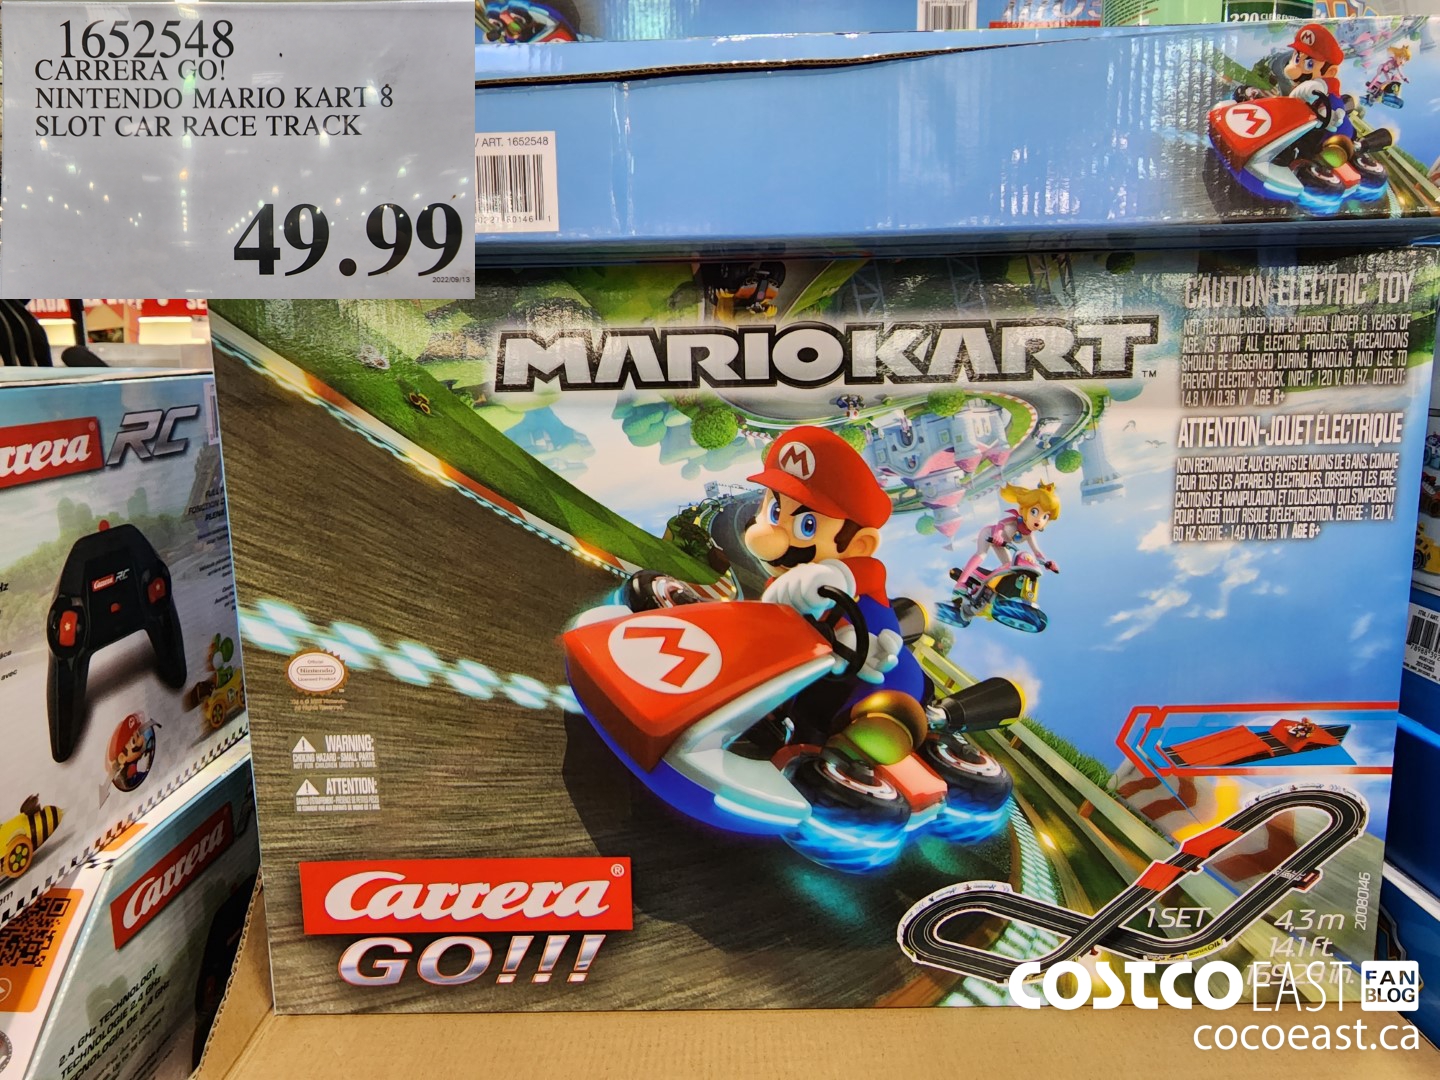 1652548 Carrera Go Nintendo Mario Kart 8 Slot Car Race Track 49 99 Costco East Fan Blog 3110